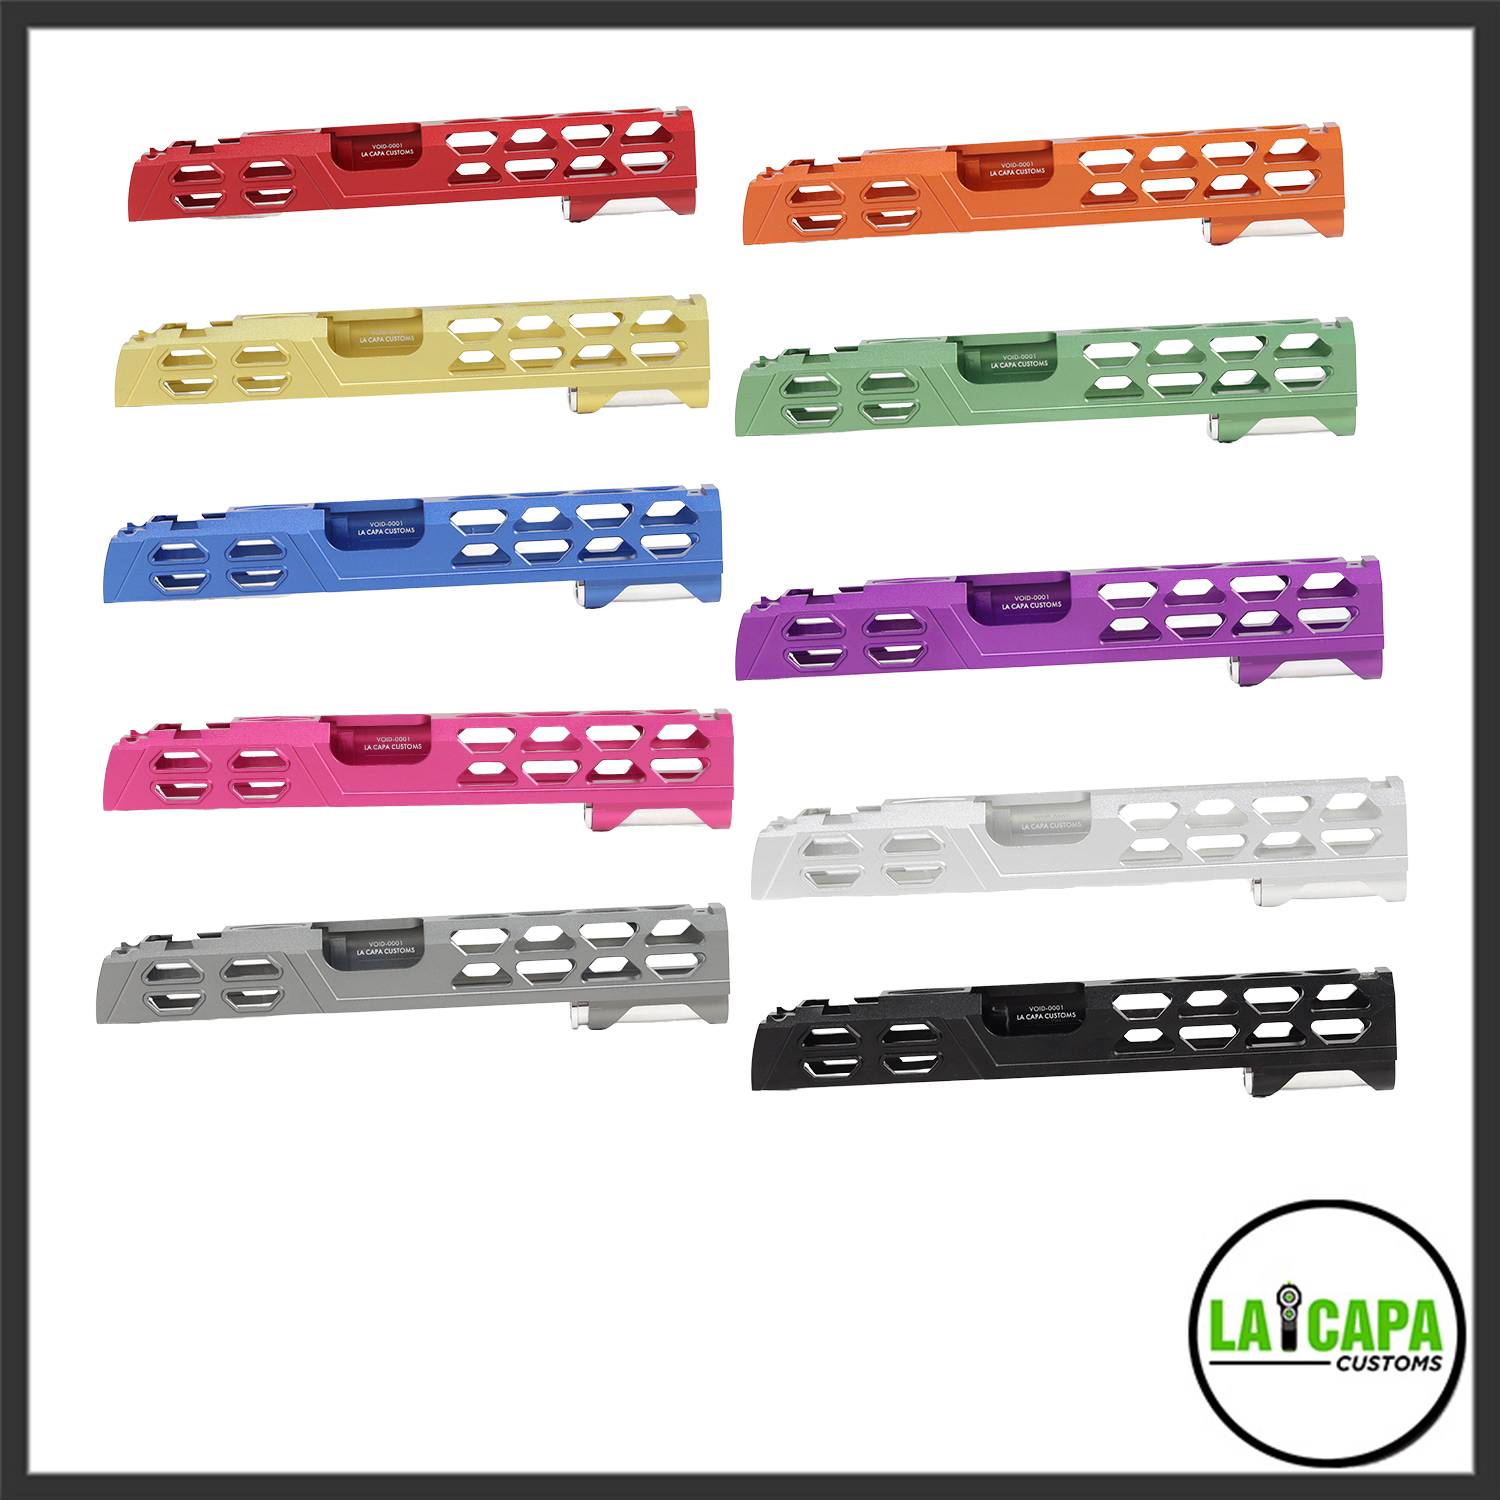 LA Capa Customs 5.1 “VOID” Aluminum Slide

- Blue